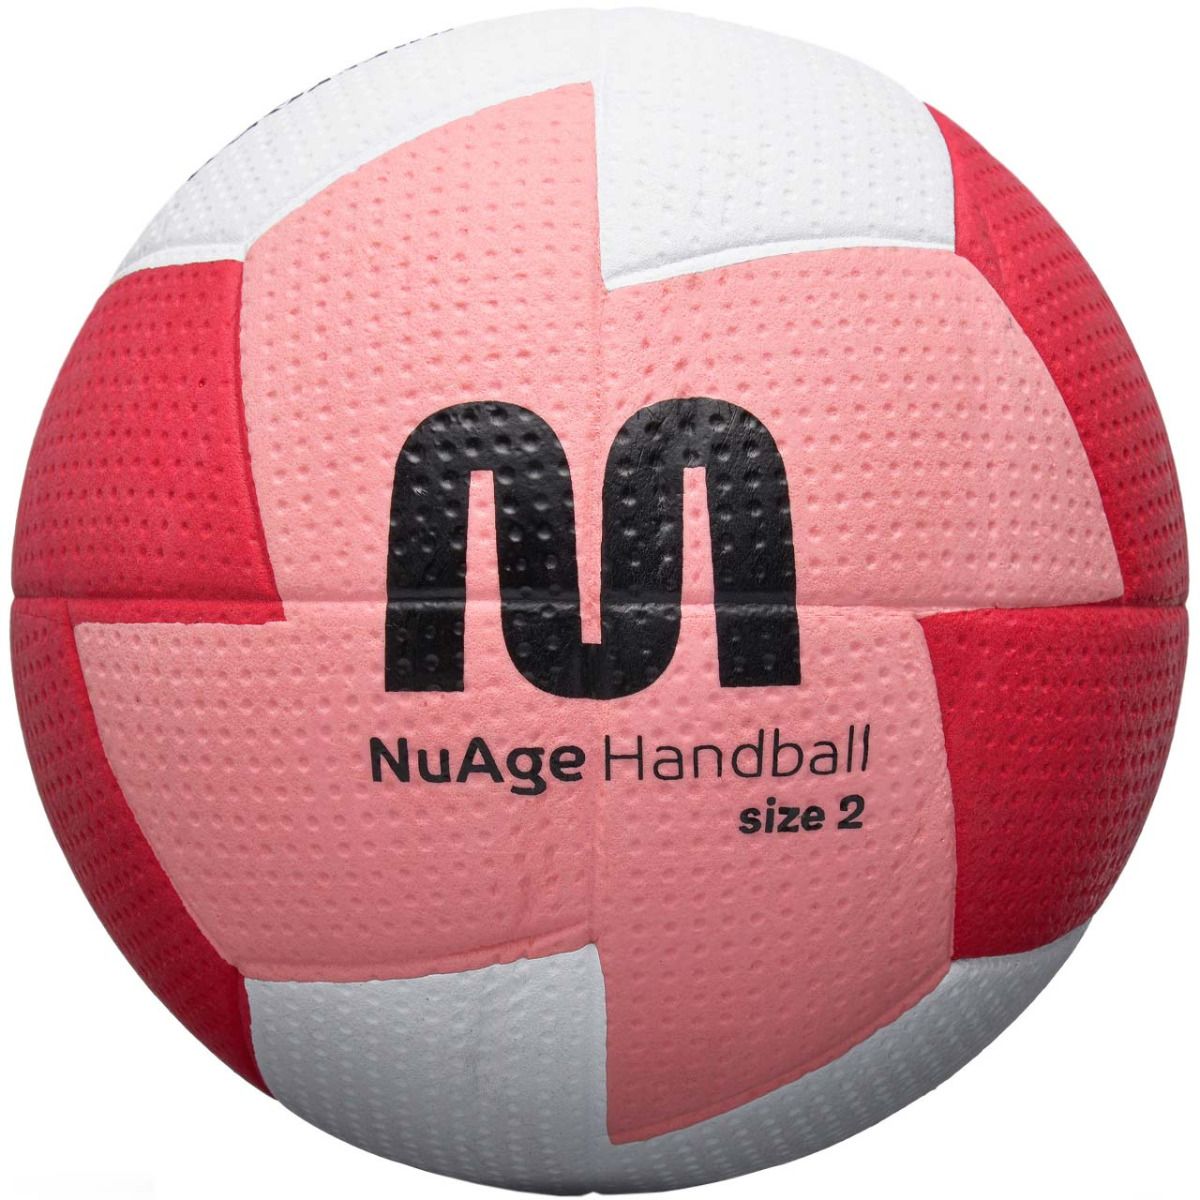 Meteor Damen Handball Nuage 2 16693